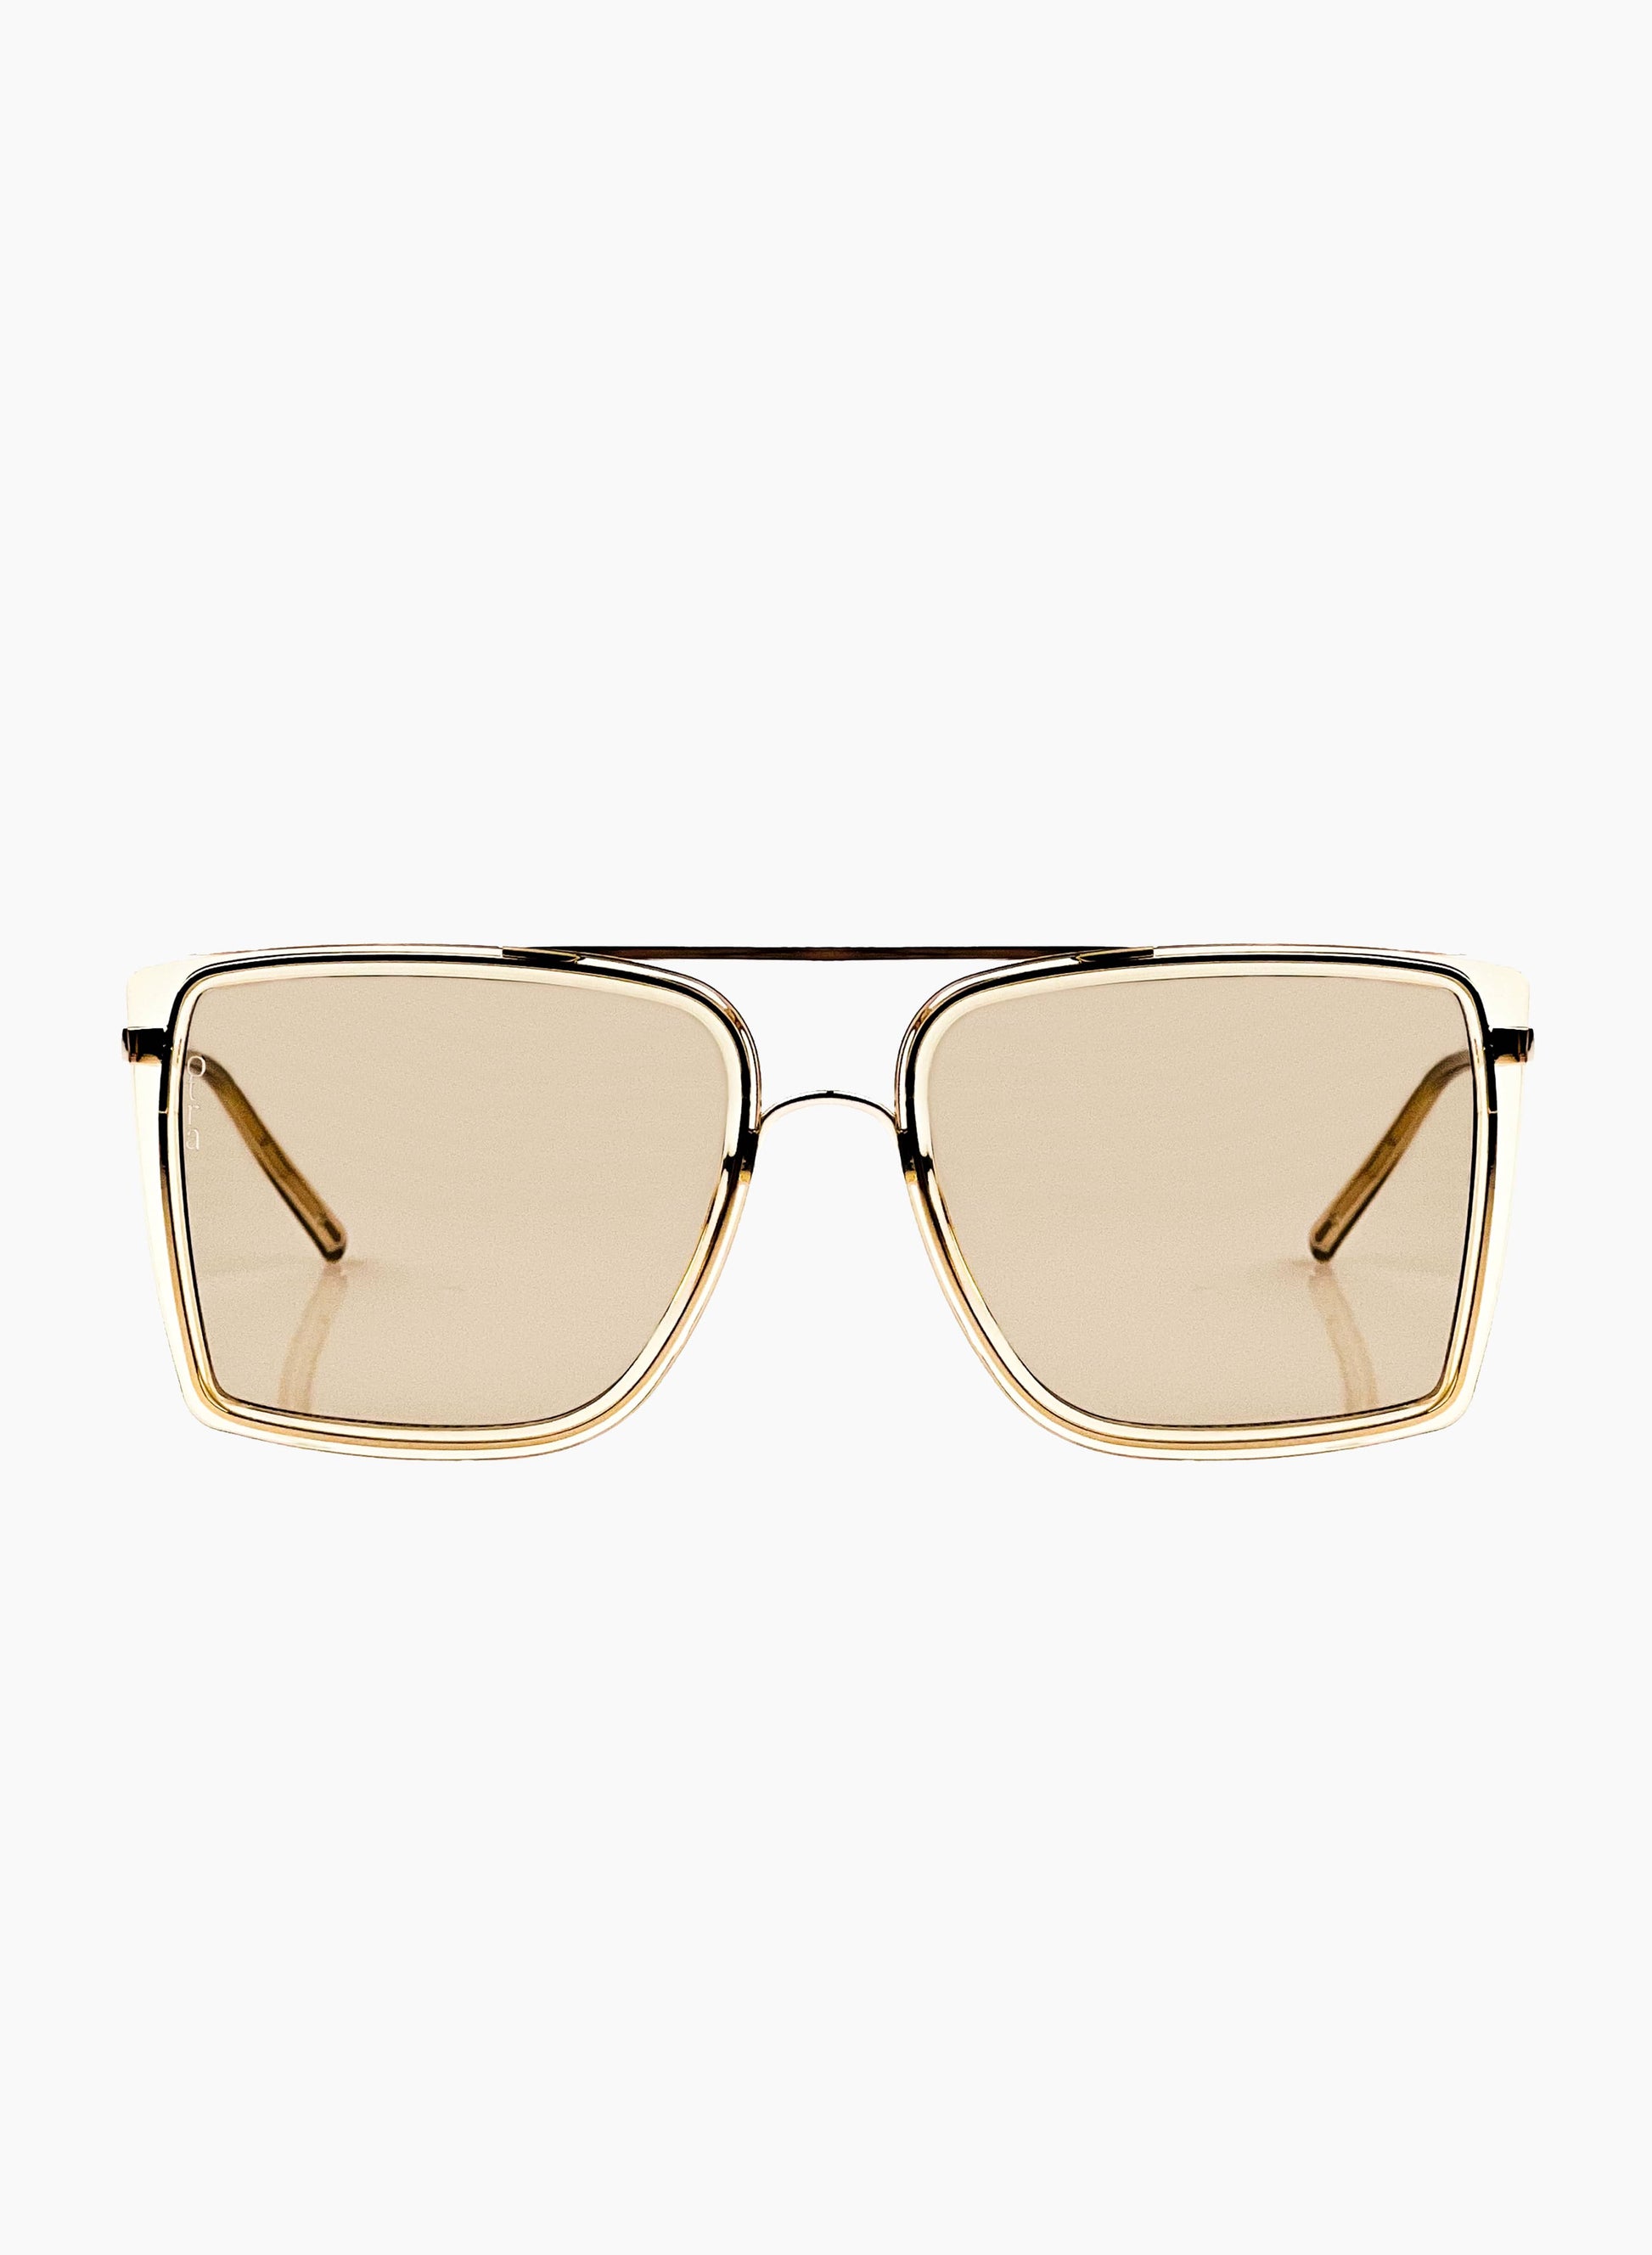 Velda oversized square aviator sunglasses in gold